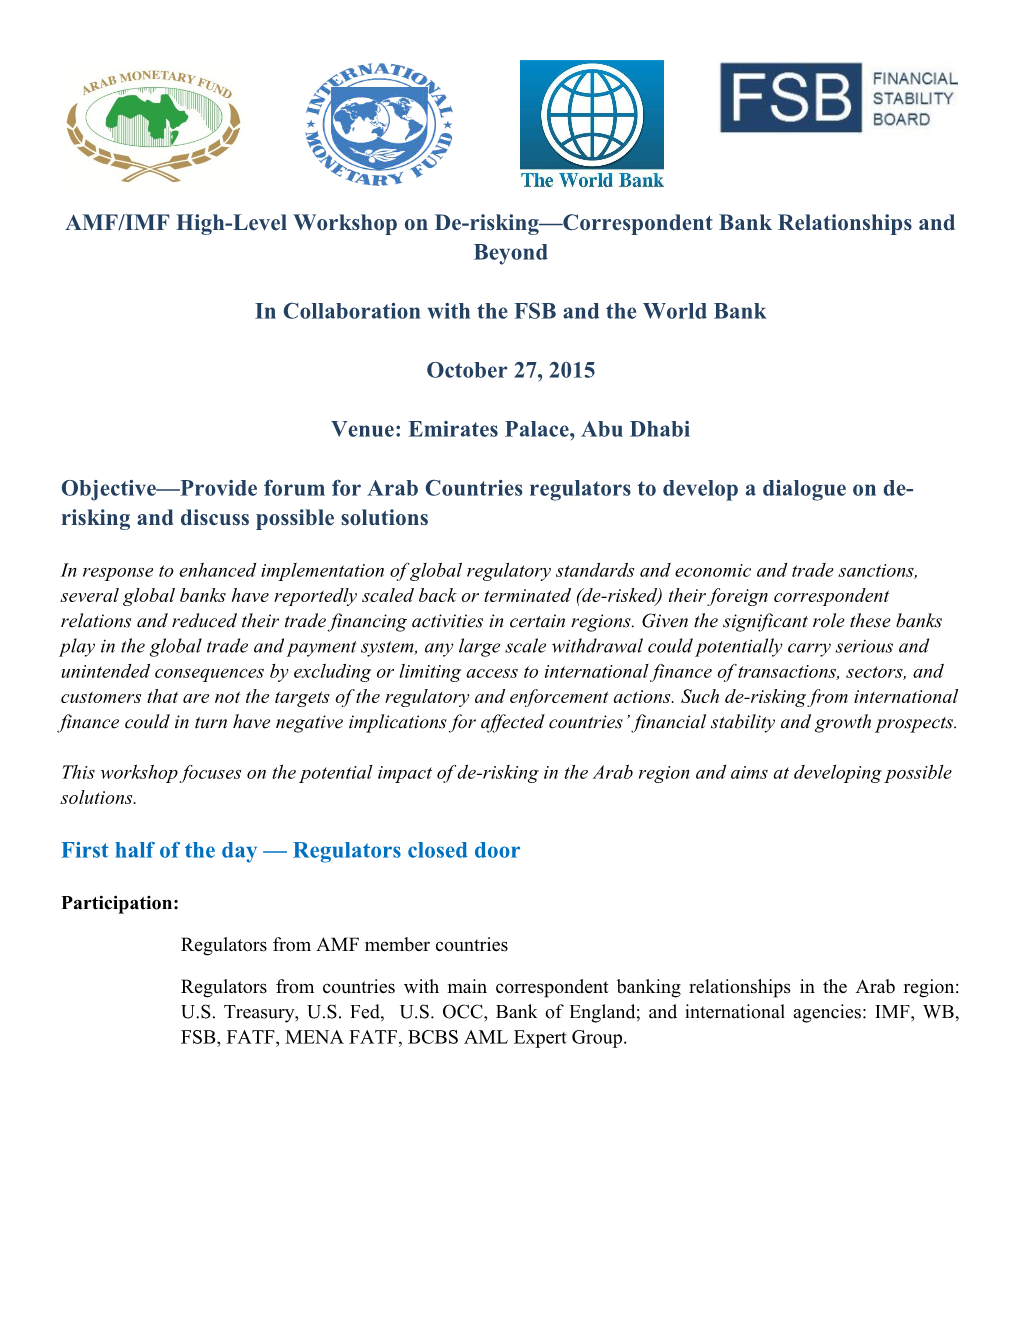 AMF/IMF High-Level Workshop on De-Risking Correspondent Bank Relationships and Beyond